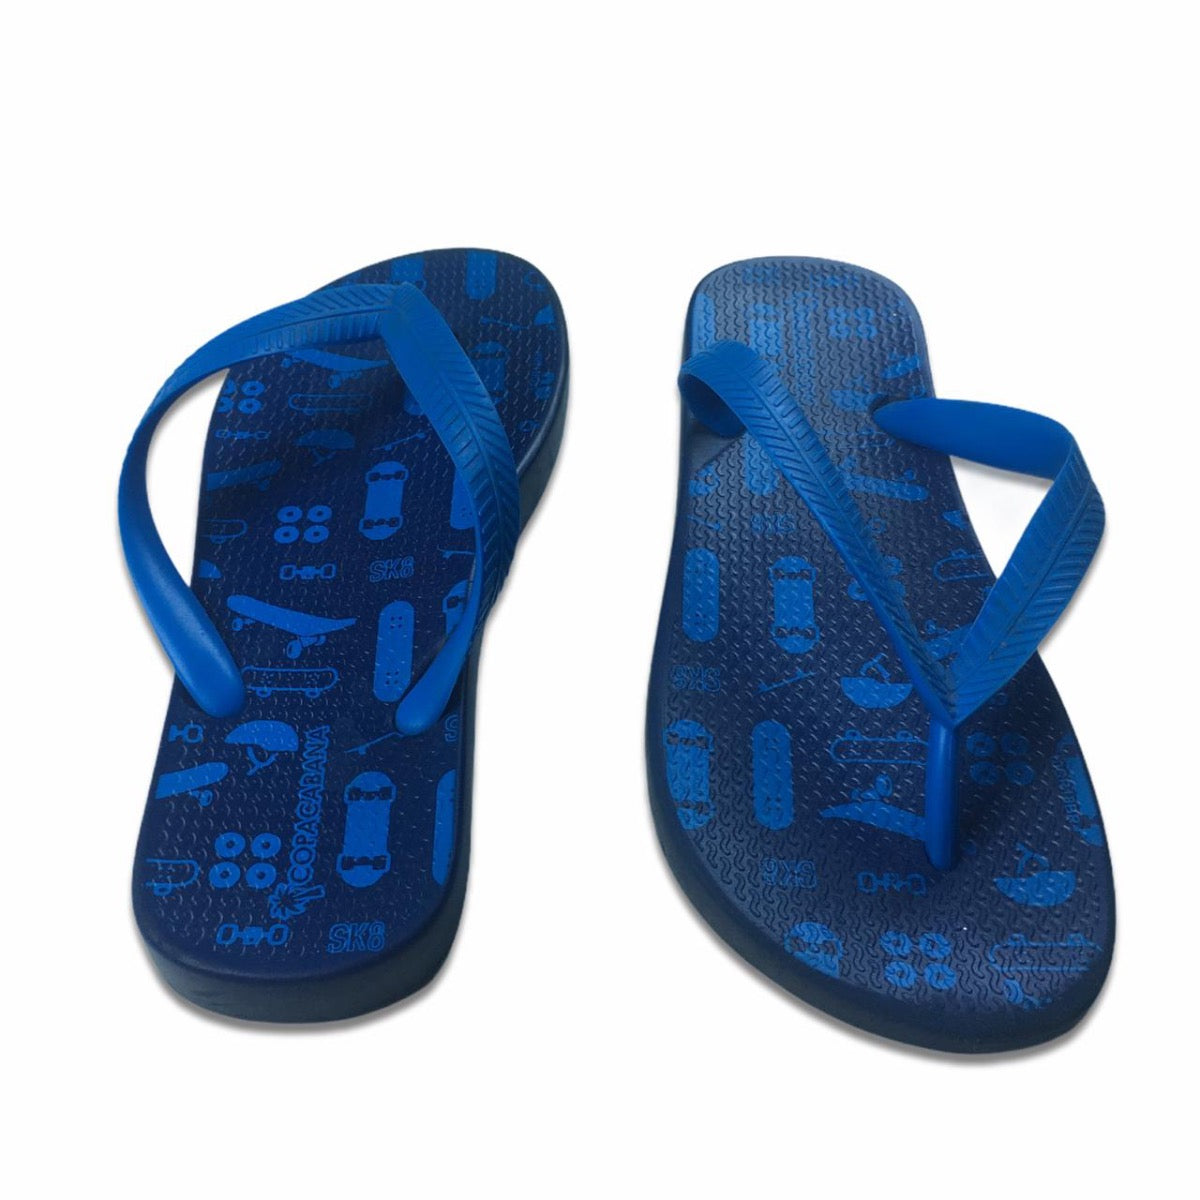 Sandalias Azules con Diseños Celestes y Soportes de Goma Celestes